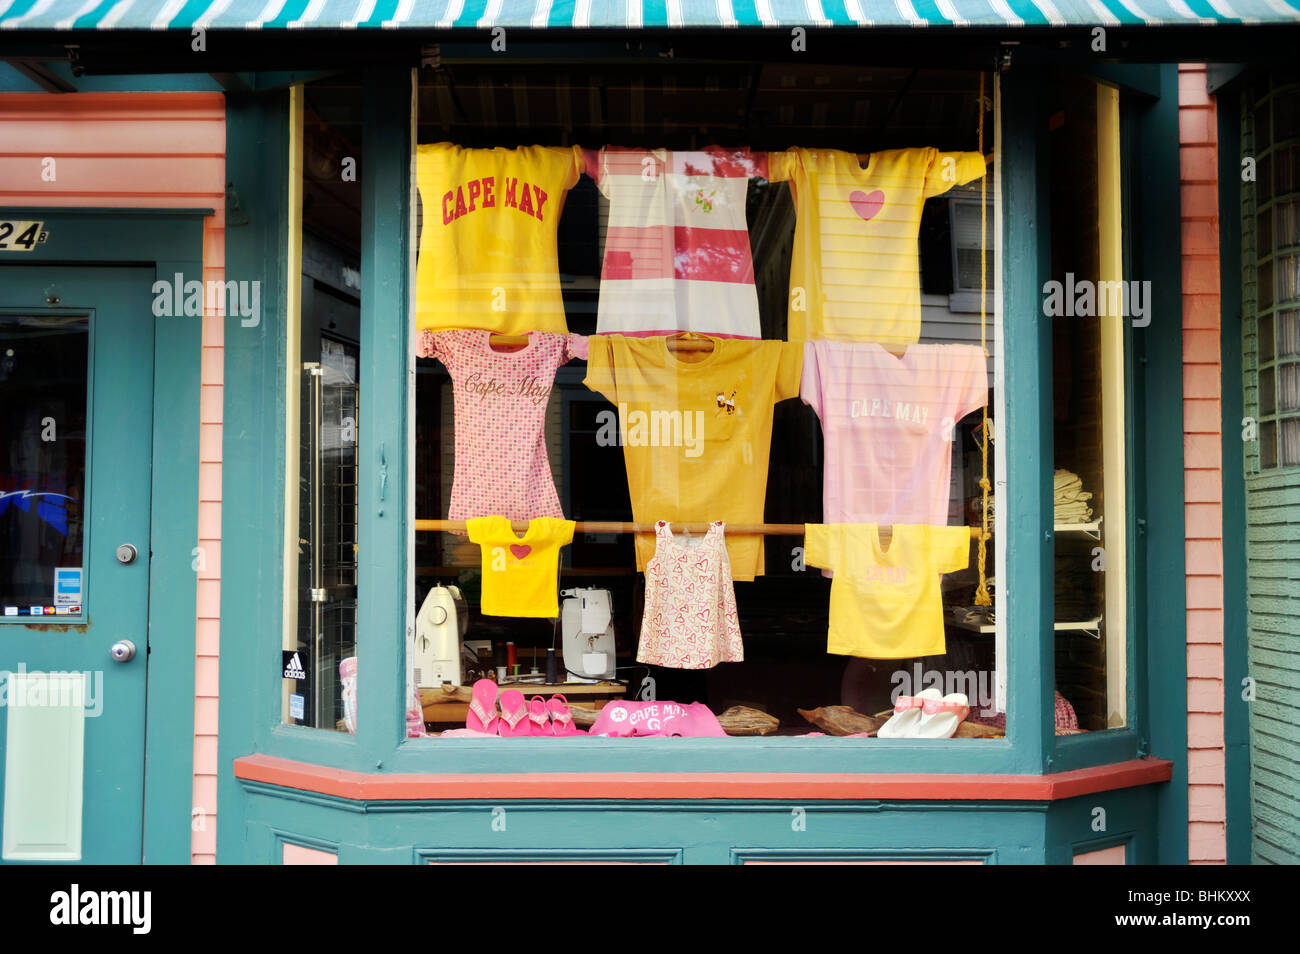 T Shirts dans la vitrine d'un magasin, Cape May, NJ, USA Banque D'Images